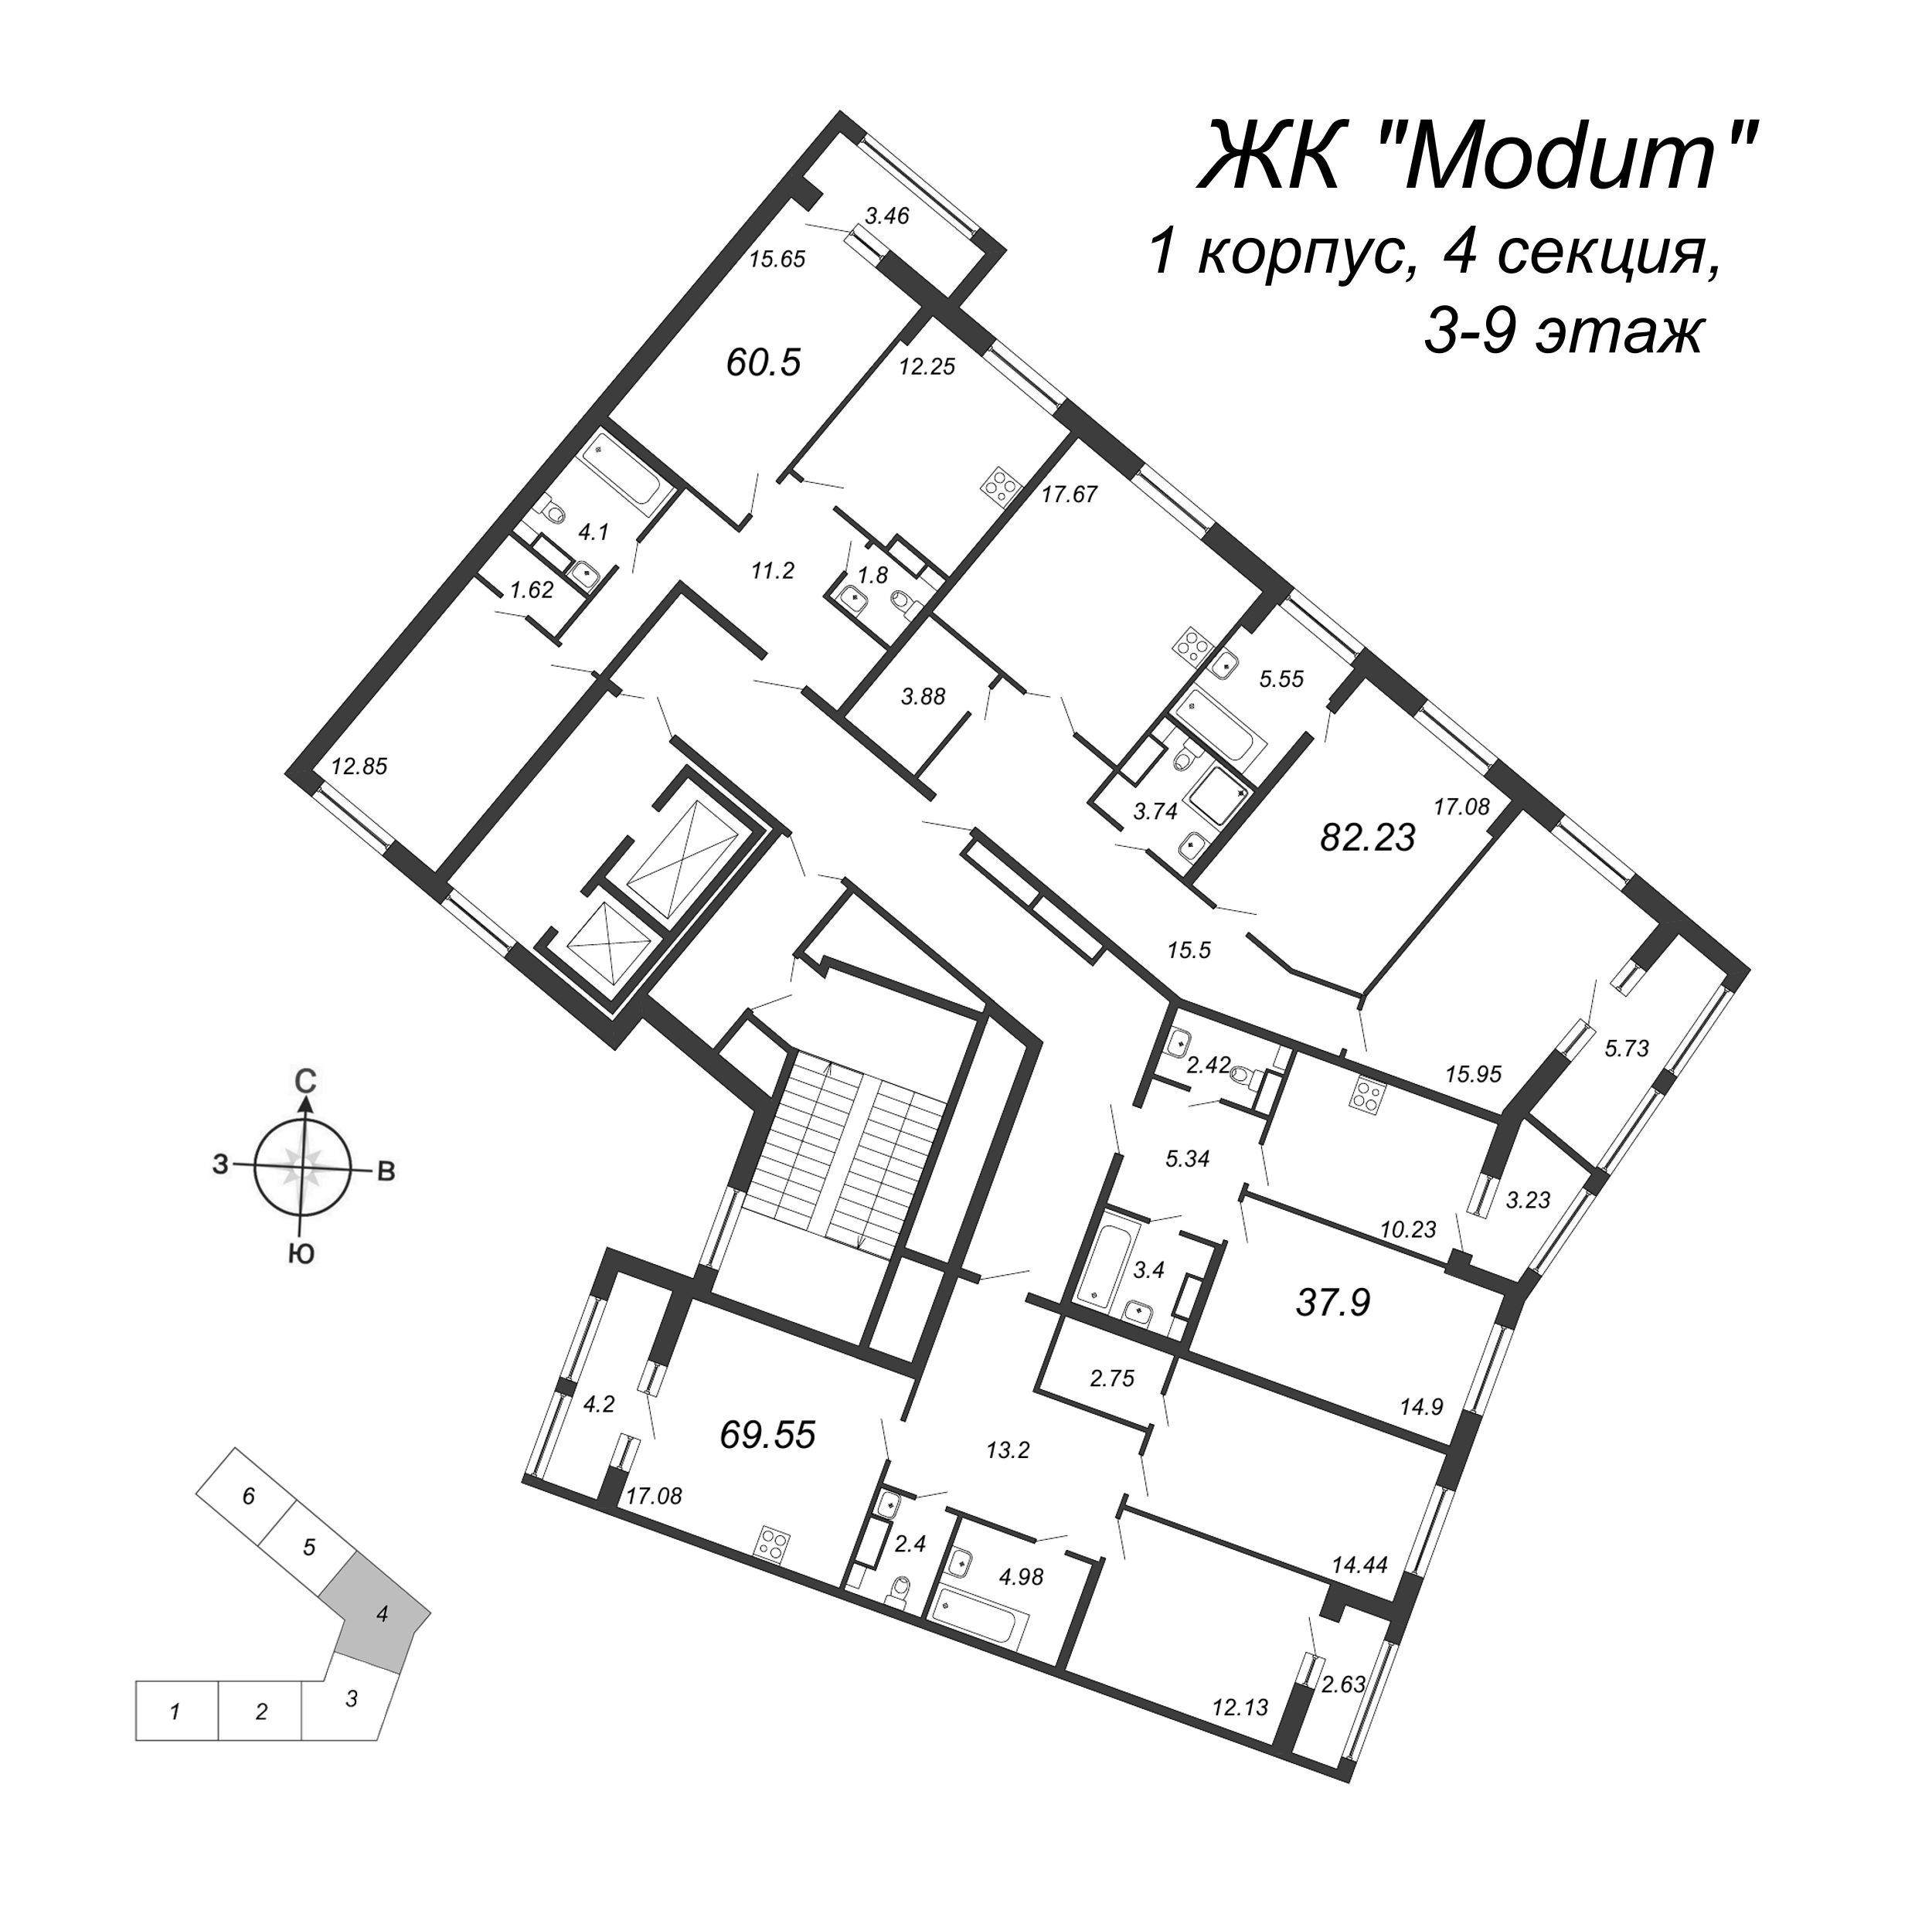 3-комнатная (Евро) квартира, 82.23 м² - планировка этажа